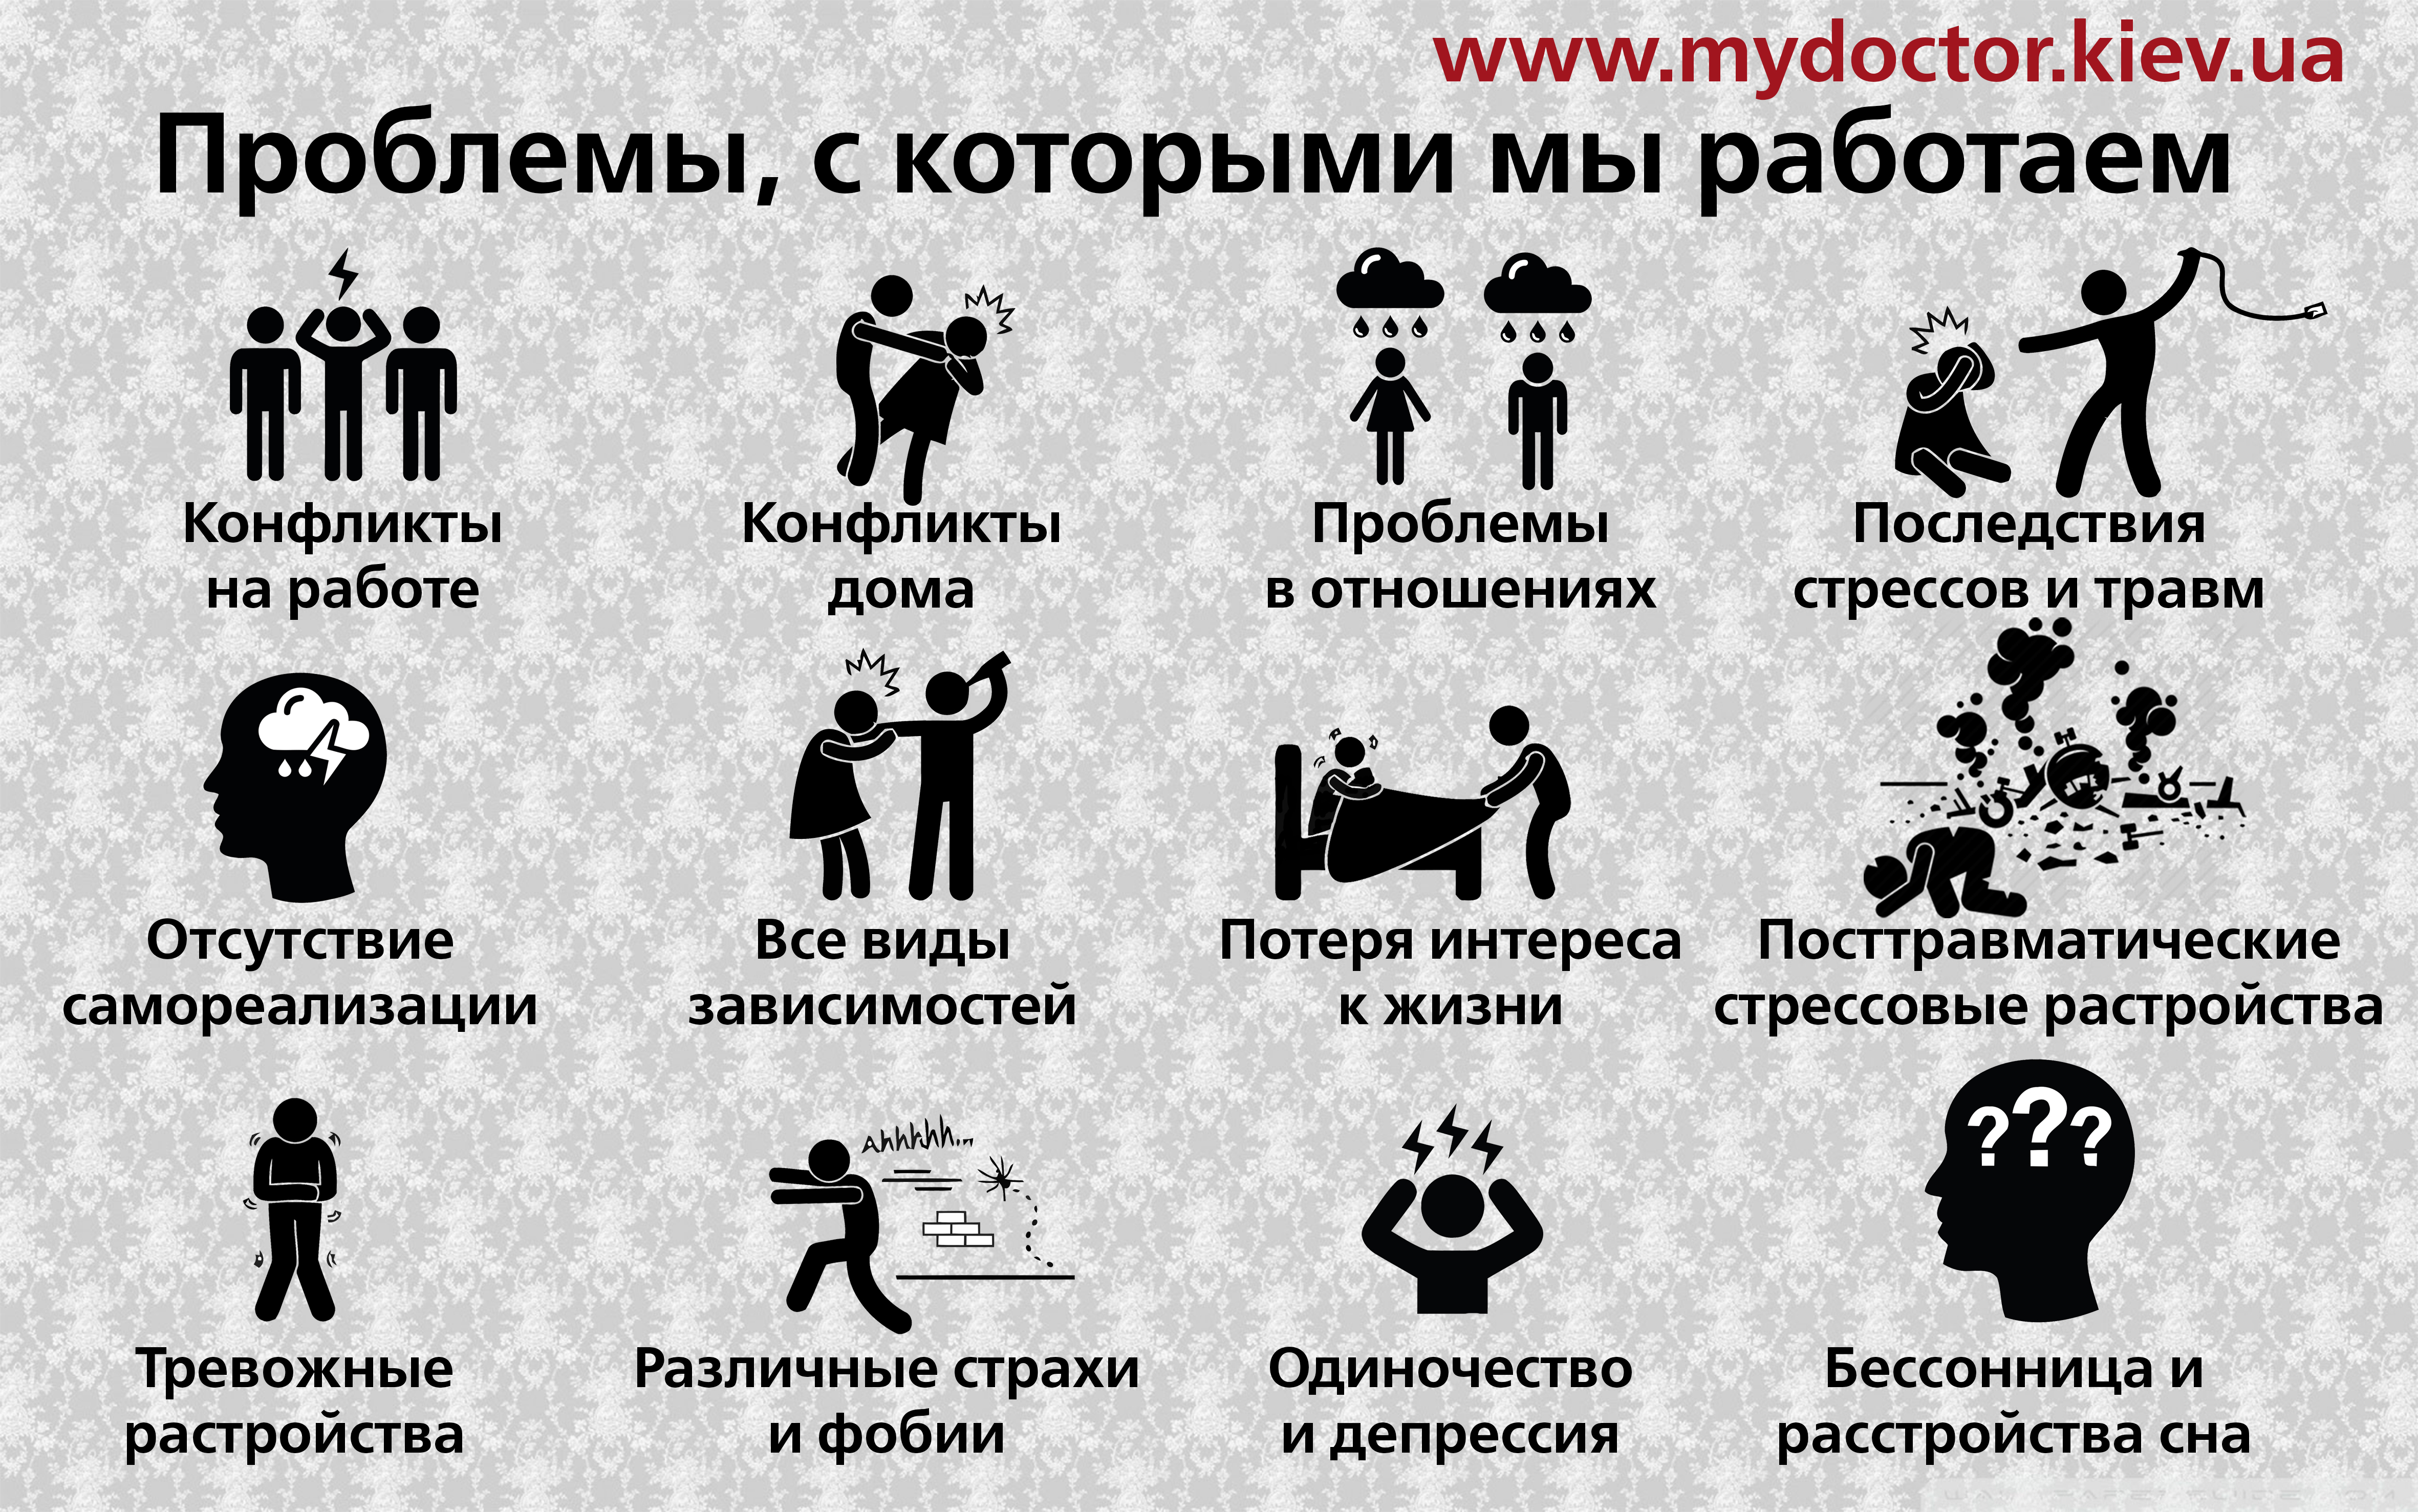 психолог киев mydoctor.kiev.ua 2